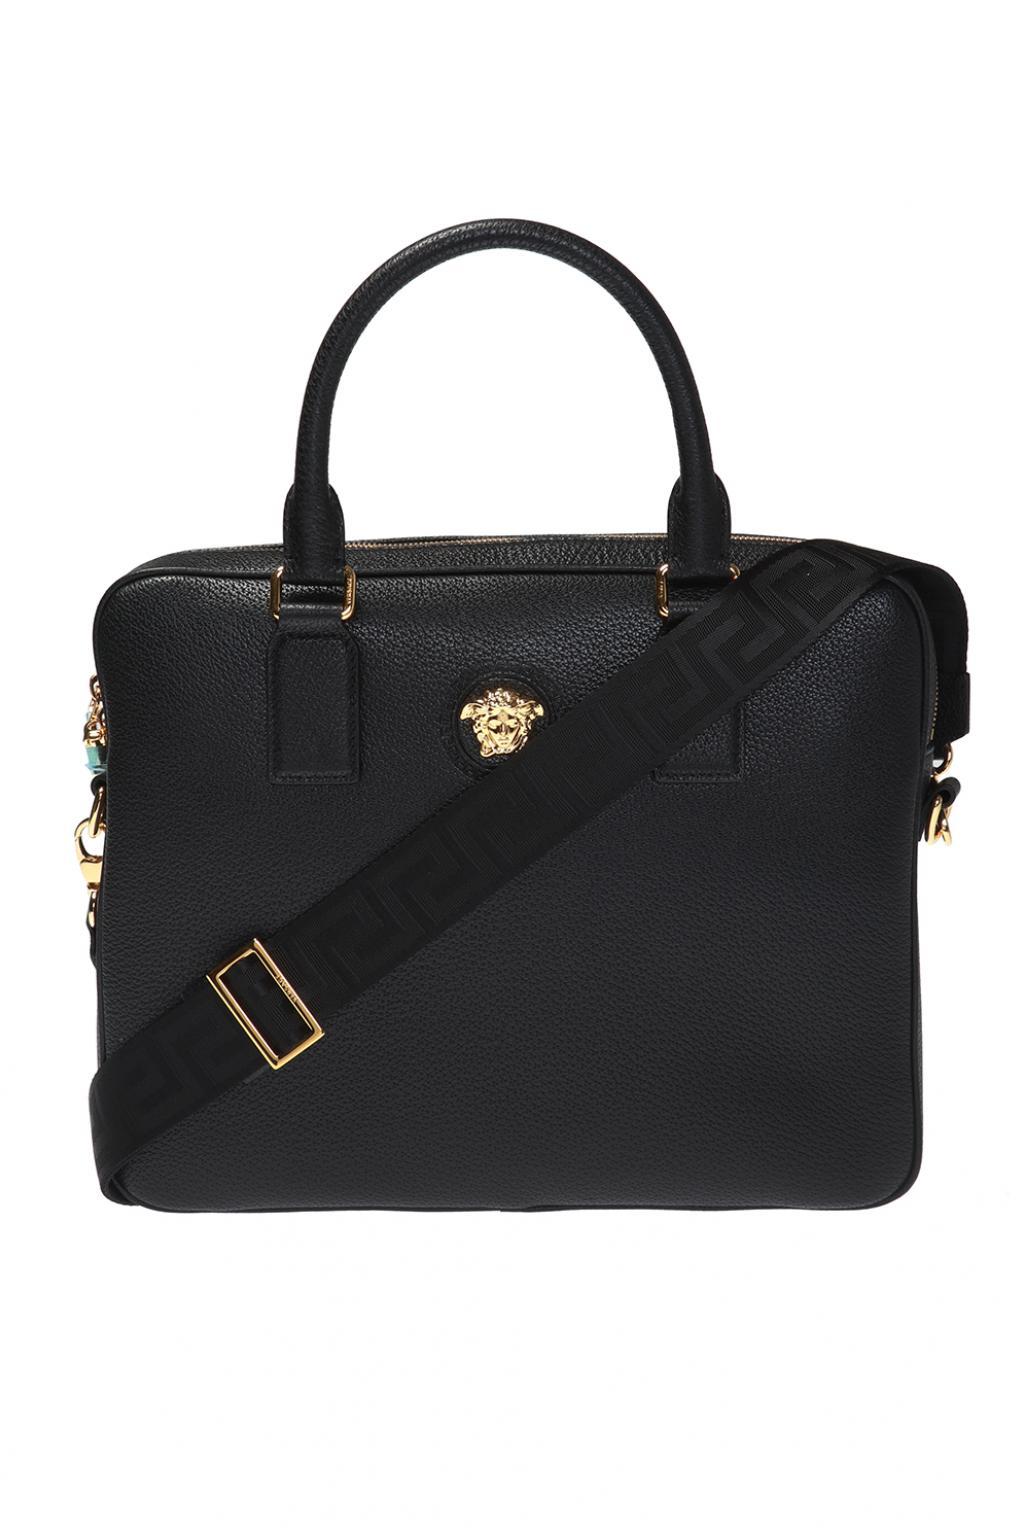 Versace Leather Medusa Head Laptop Bag in Black for Men - Lyst